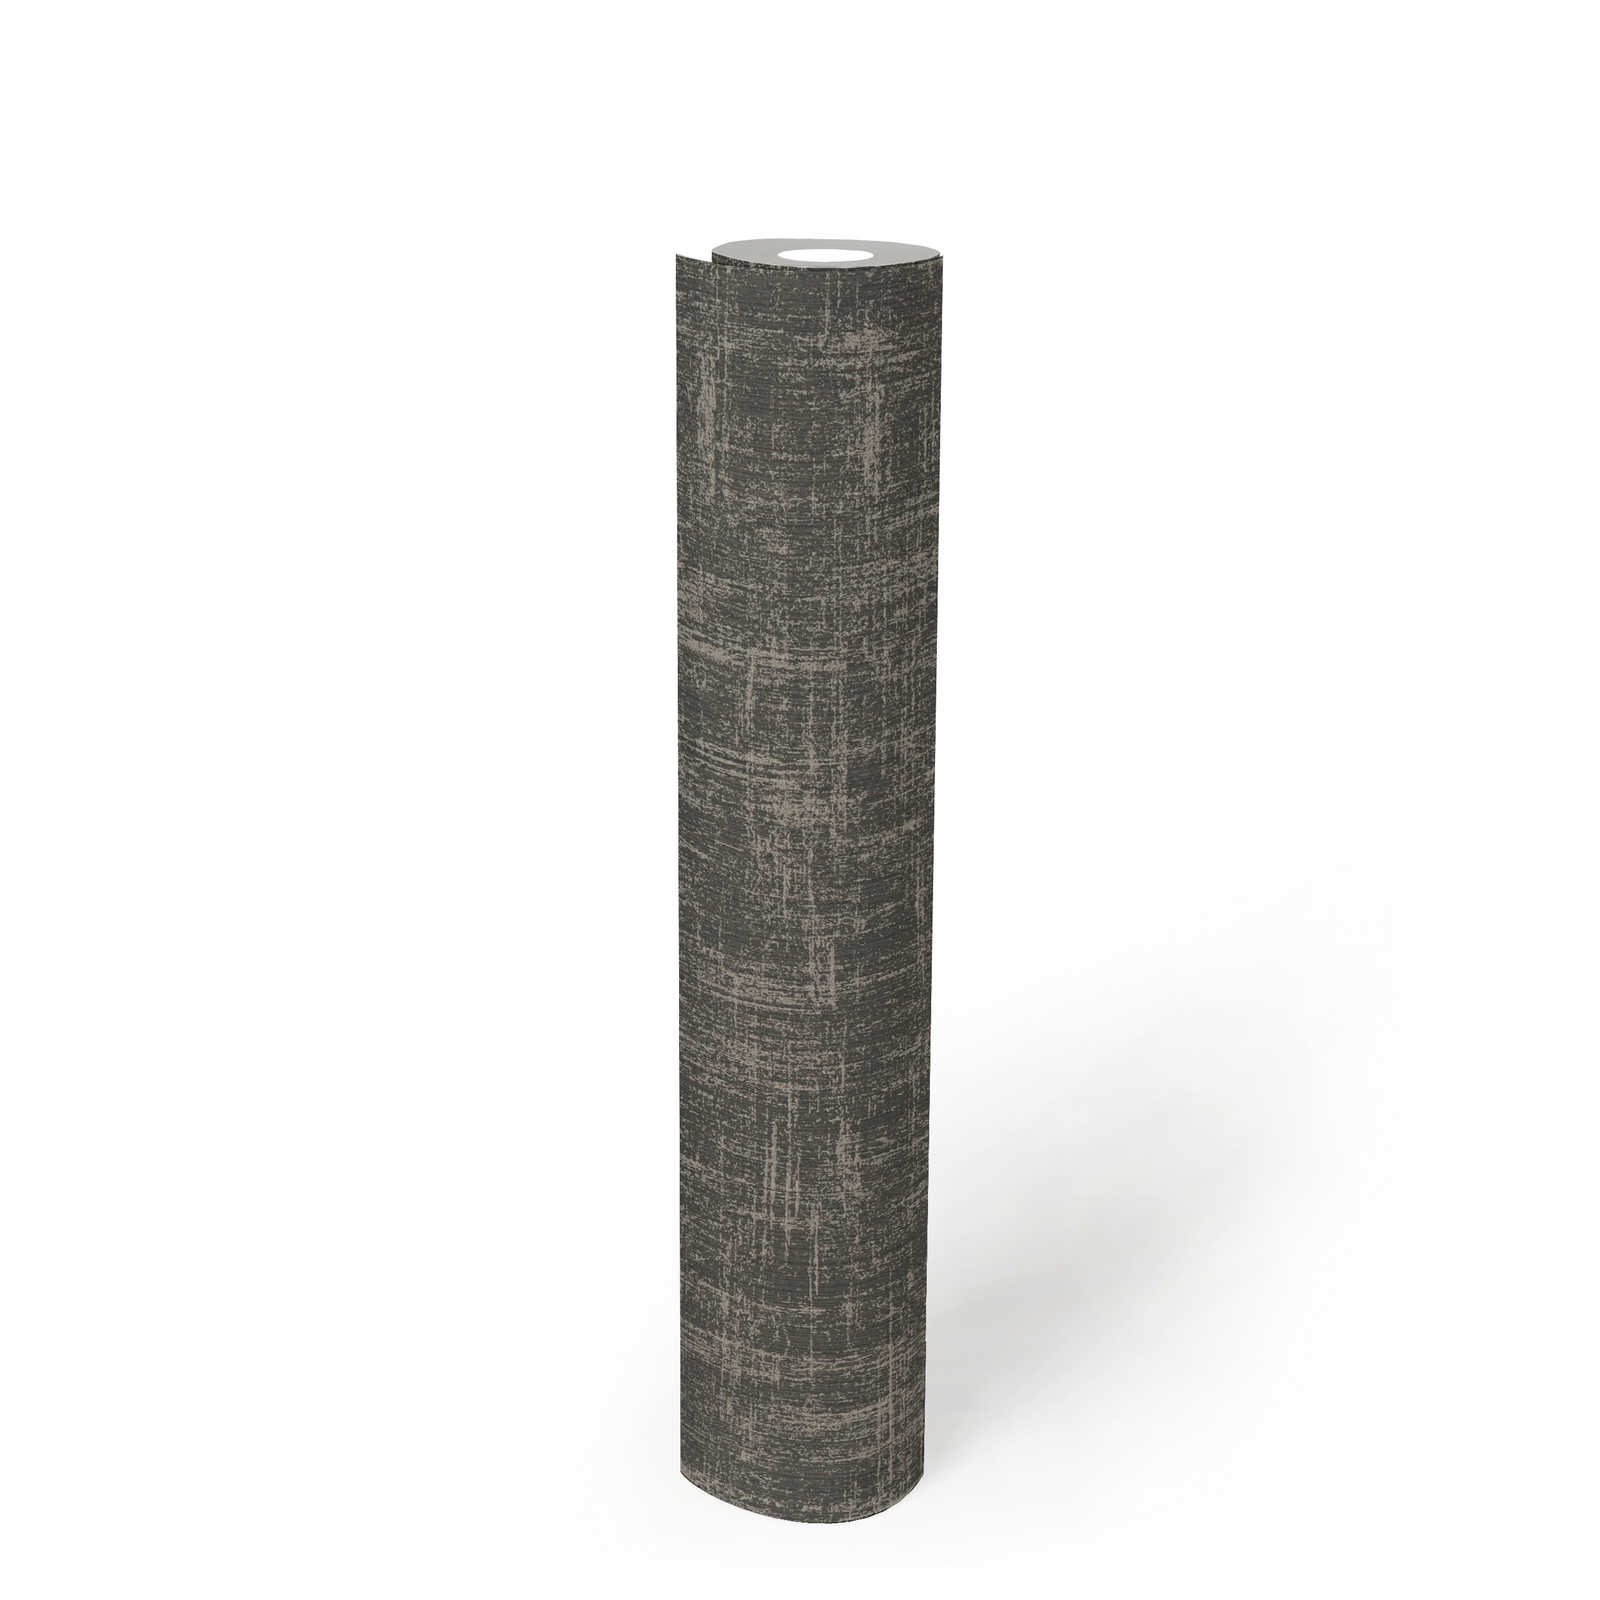             Non-woven wallpaper with mottled metallic effect - black, grey
        